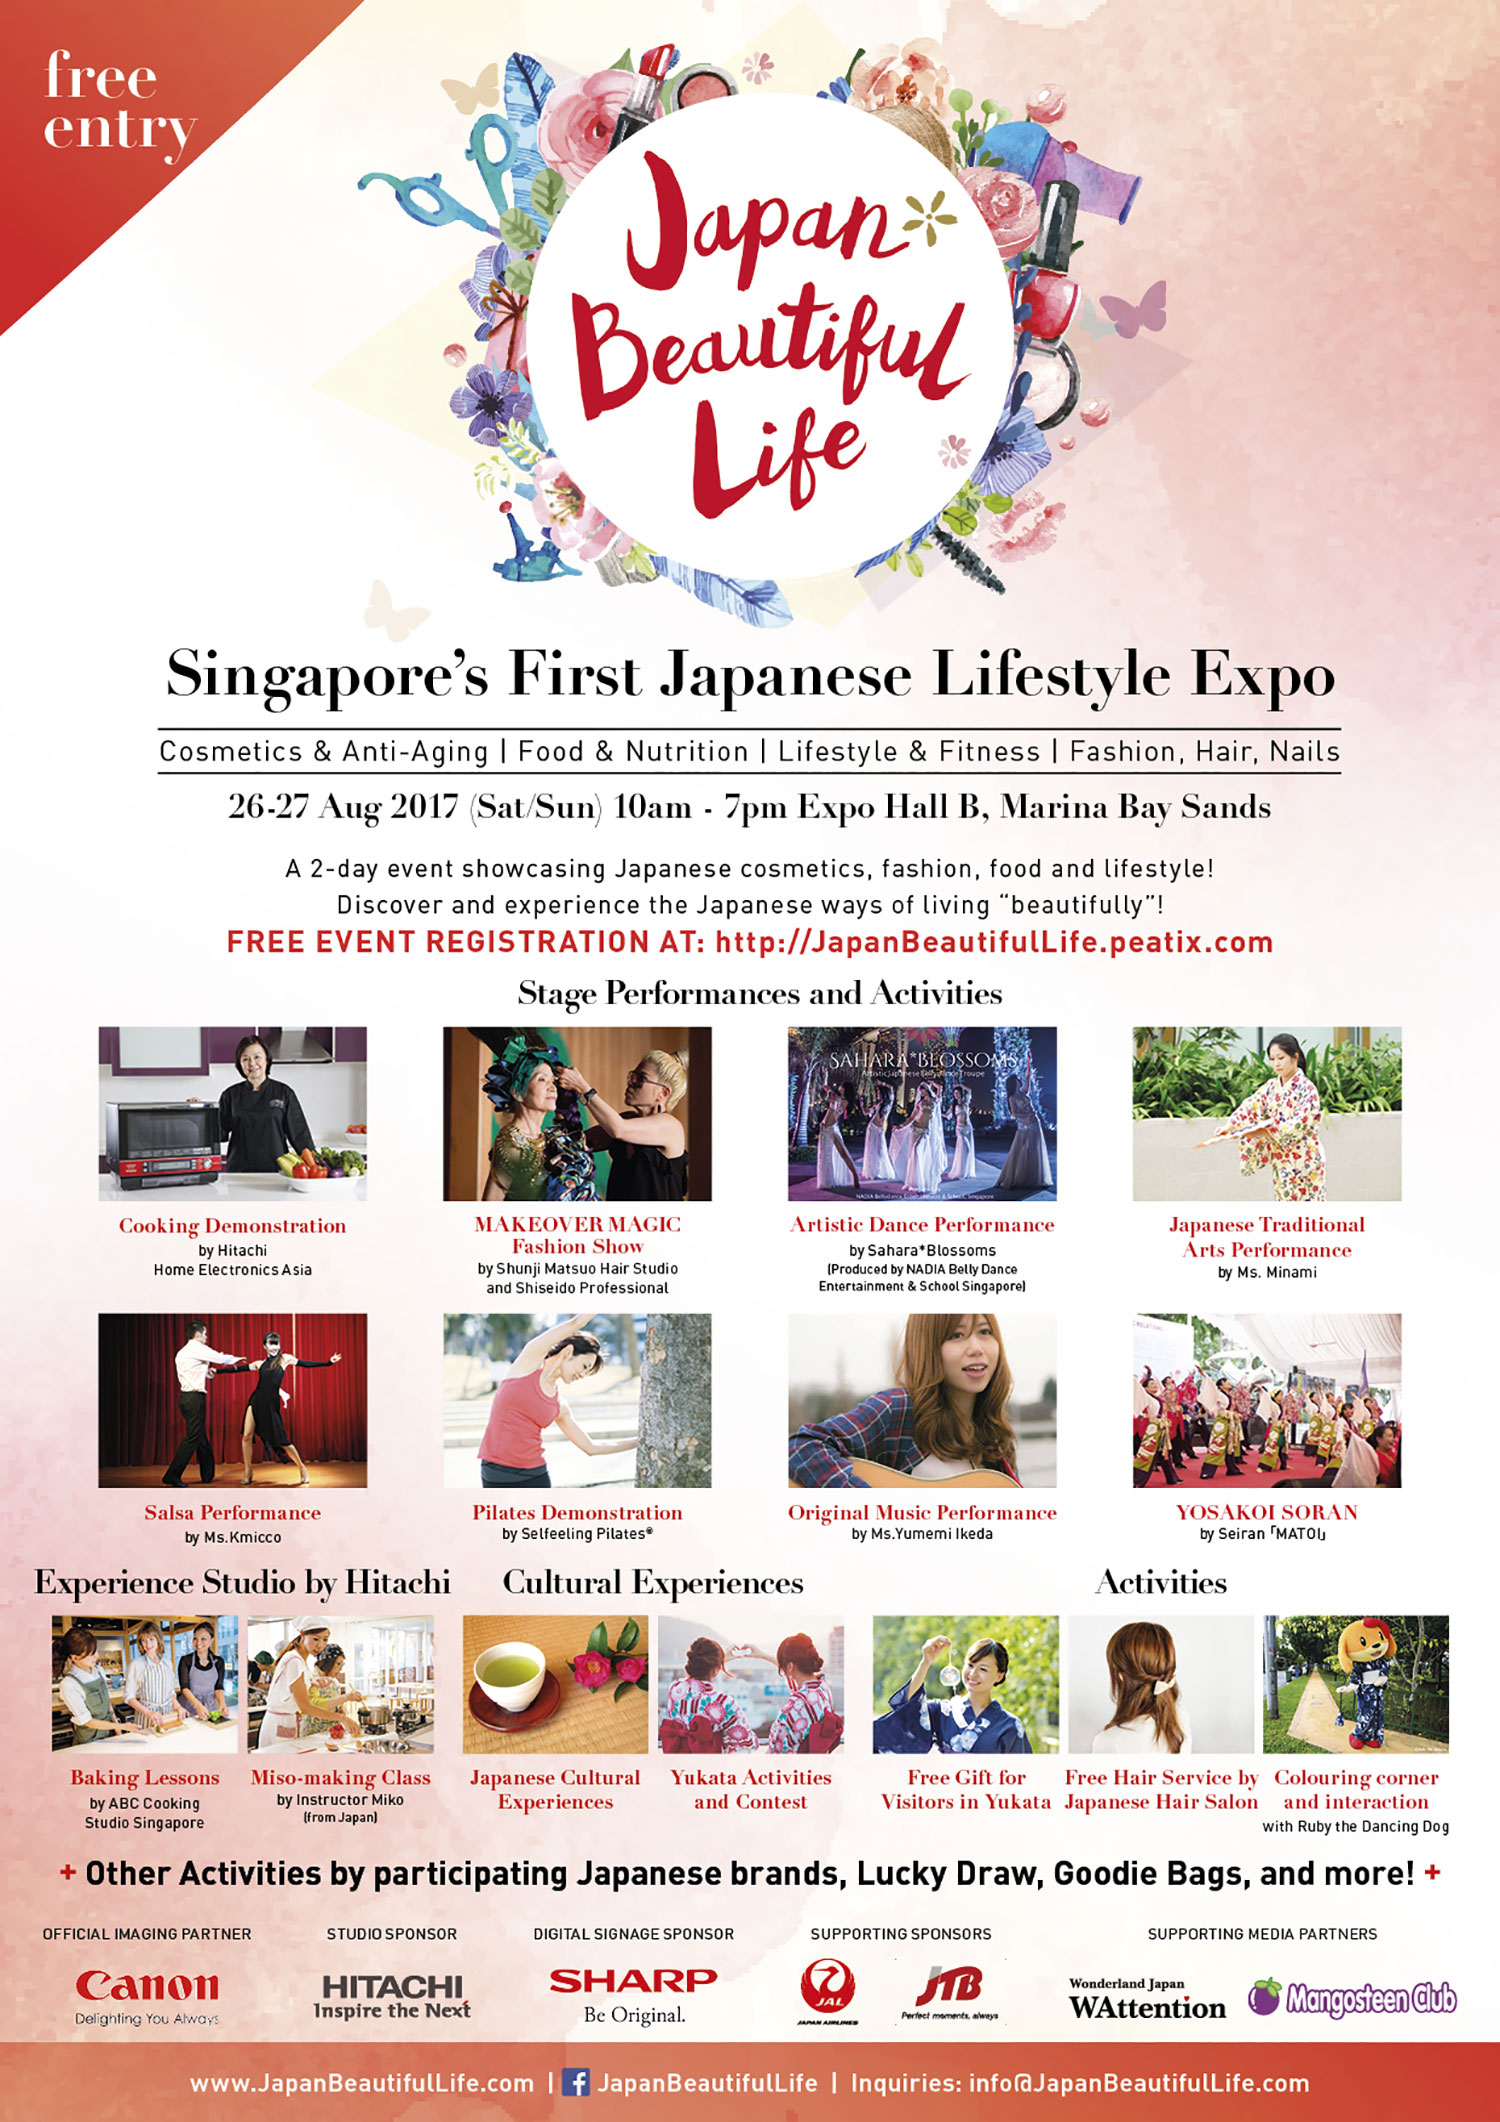 Japan Beautiful Life, Singapore’s first Japanese Lifestyle Expo